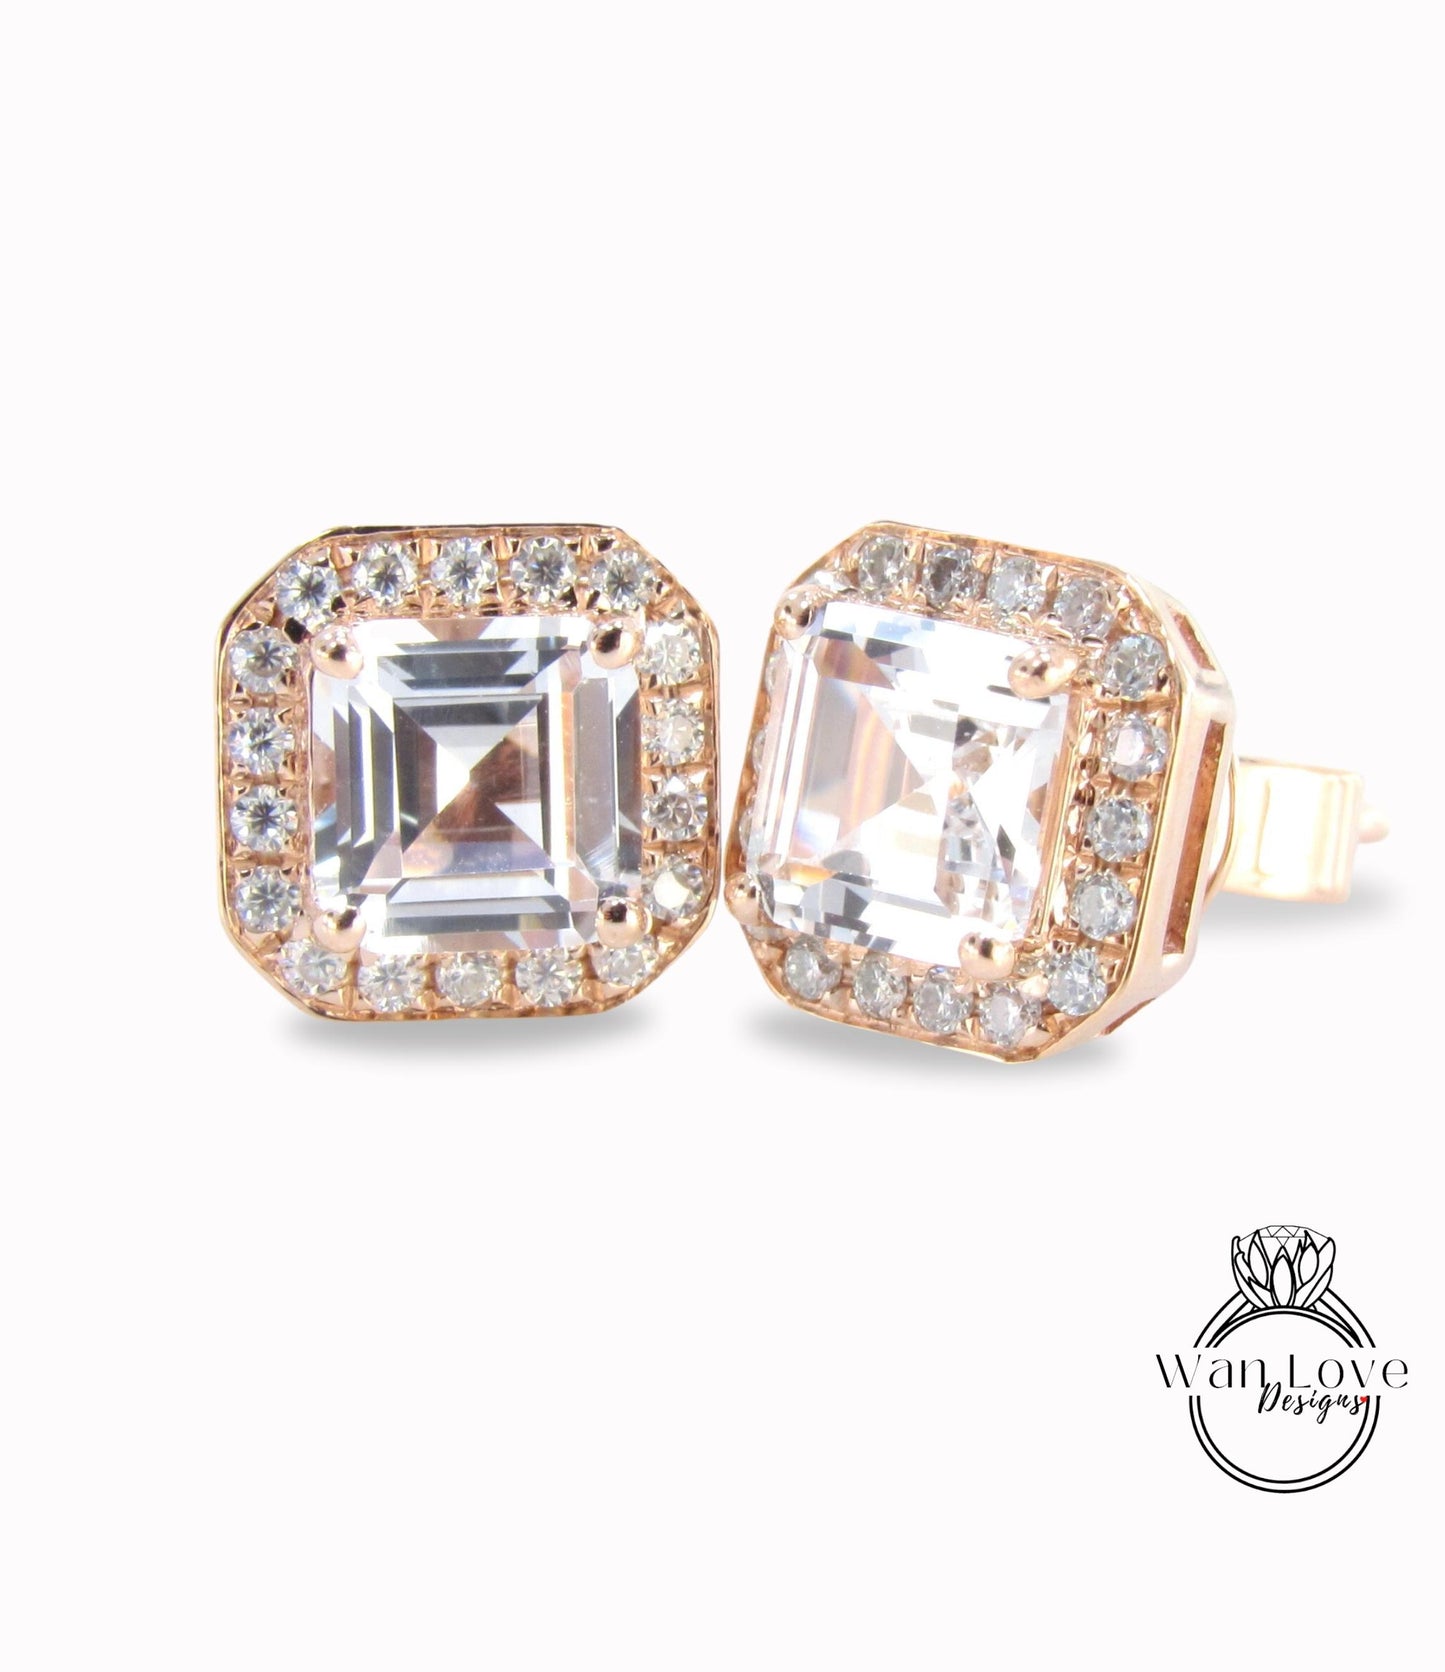 White Sapphire earrings|Vintage square cut rose gold earrings|Unique Hexagon halo earrings|Art Deco halo earrings|Wedding Anniversary studs